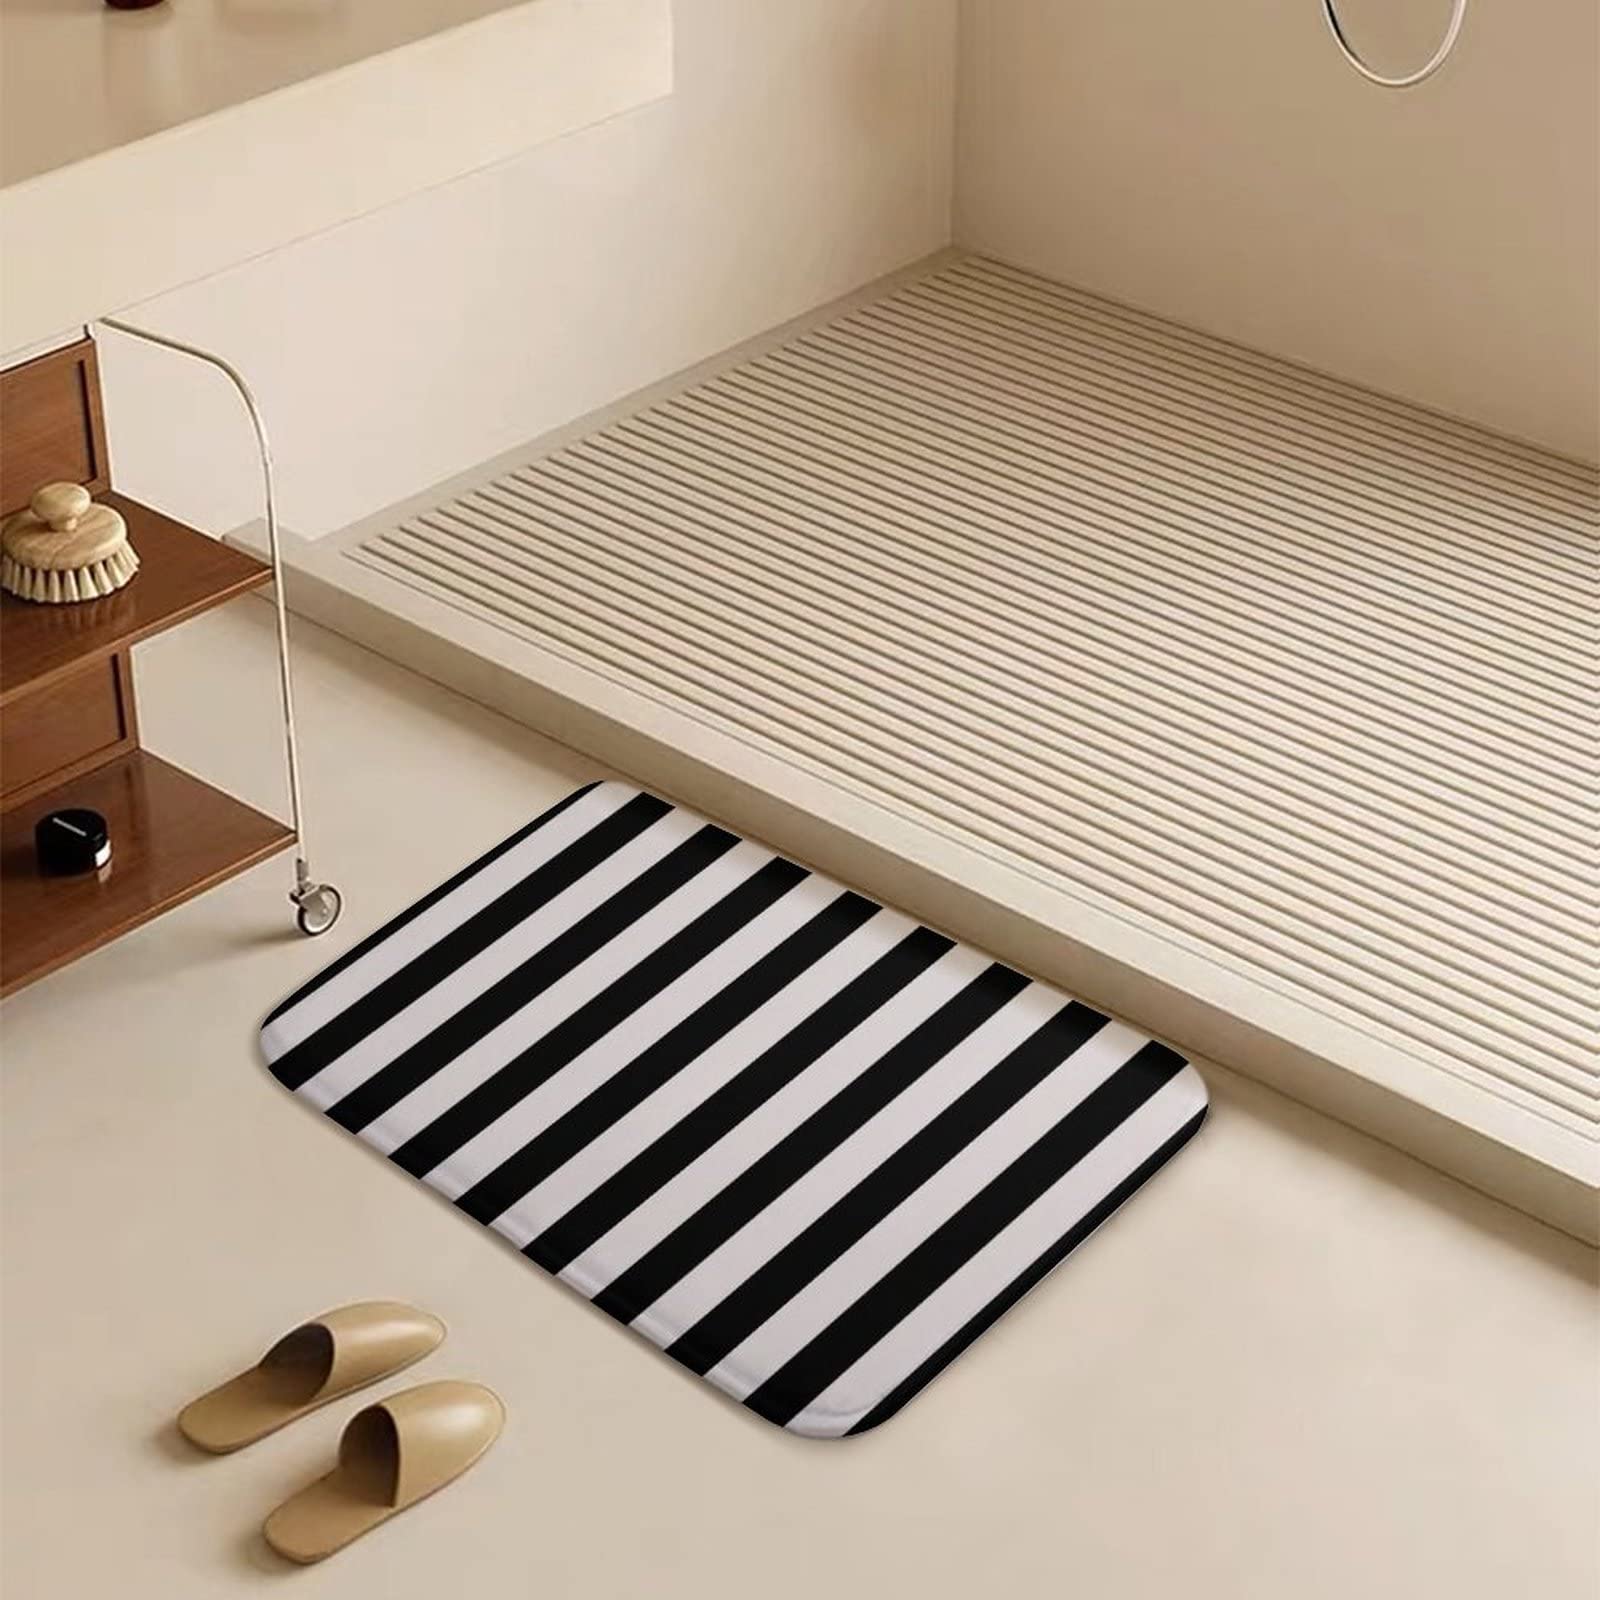 apular Black White Stripes Bath Rugs Absorbent Non Slip Door Mats Soft Carpet Washable Doormat for Kitchen Bathroom Entry Way Decor Accessories 16x24 Inch